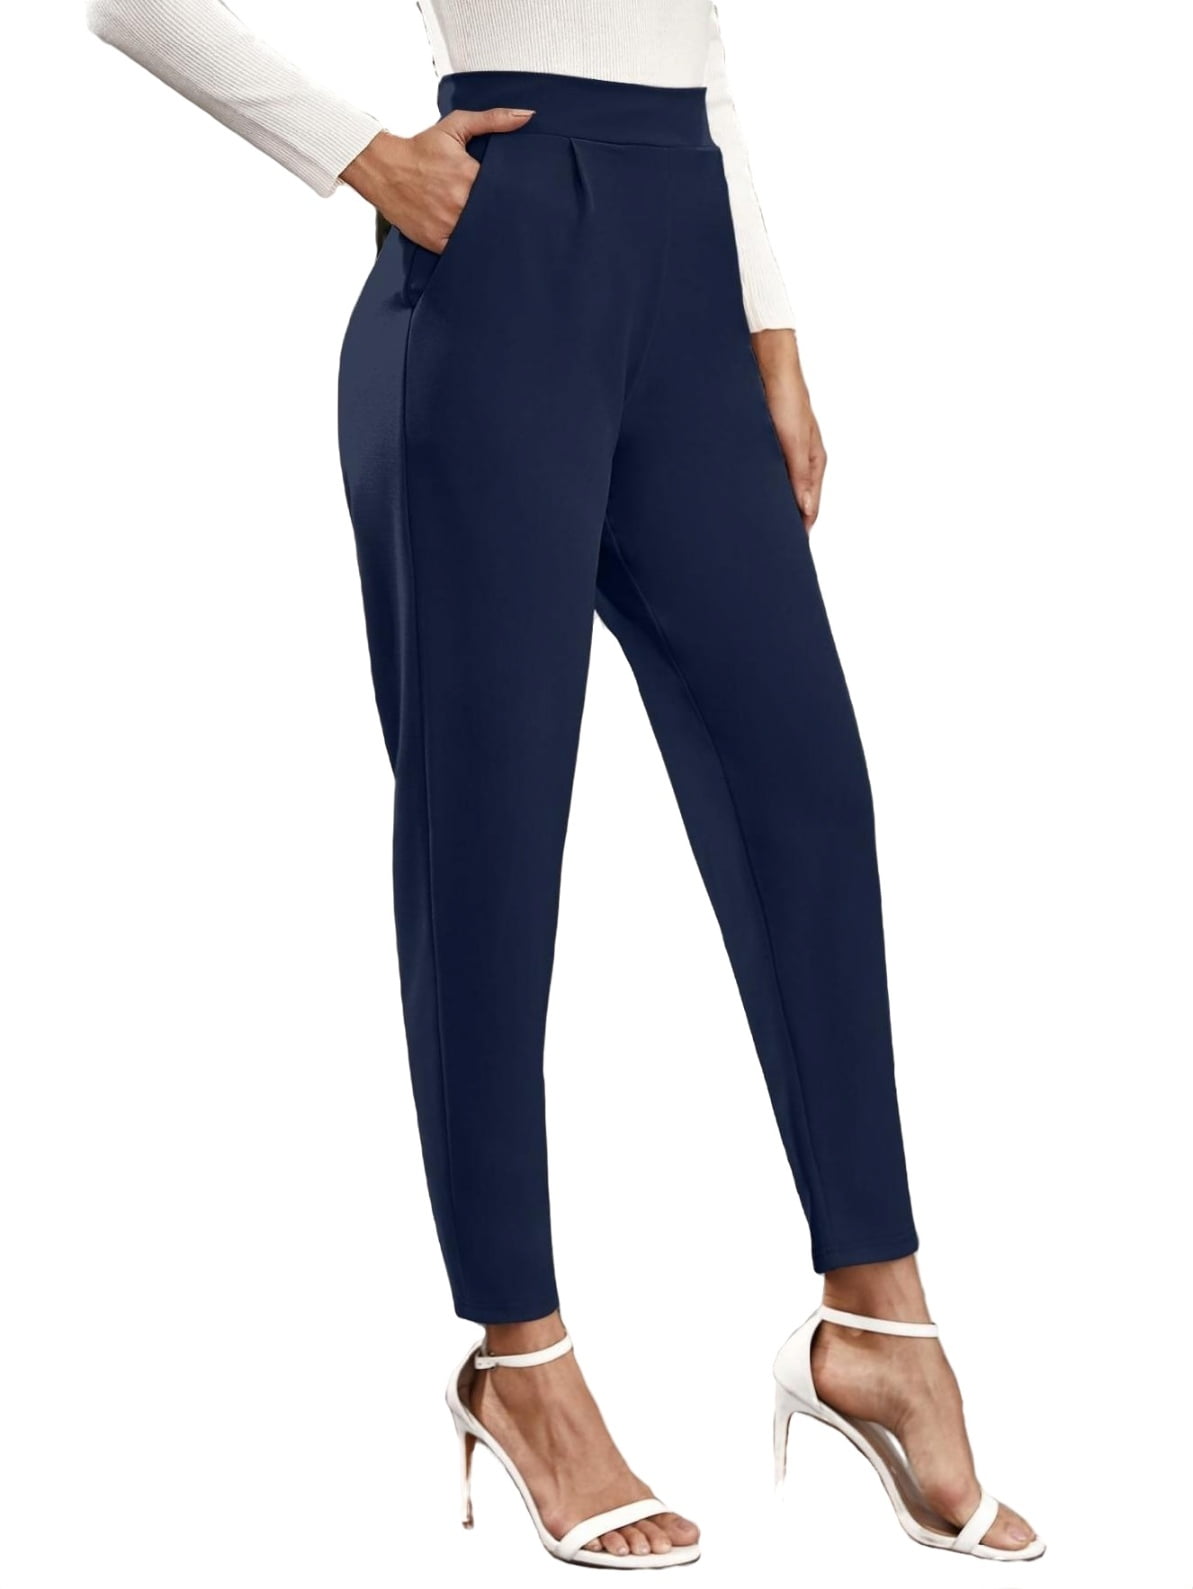 Navy Pants | Navy Blue Pants Online | Buy Women's Navy Pants Australia |-  THE ICONIC